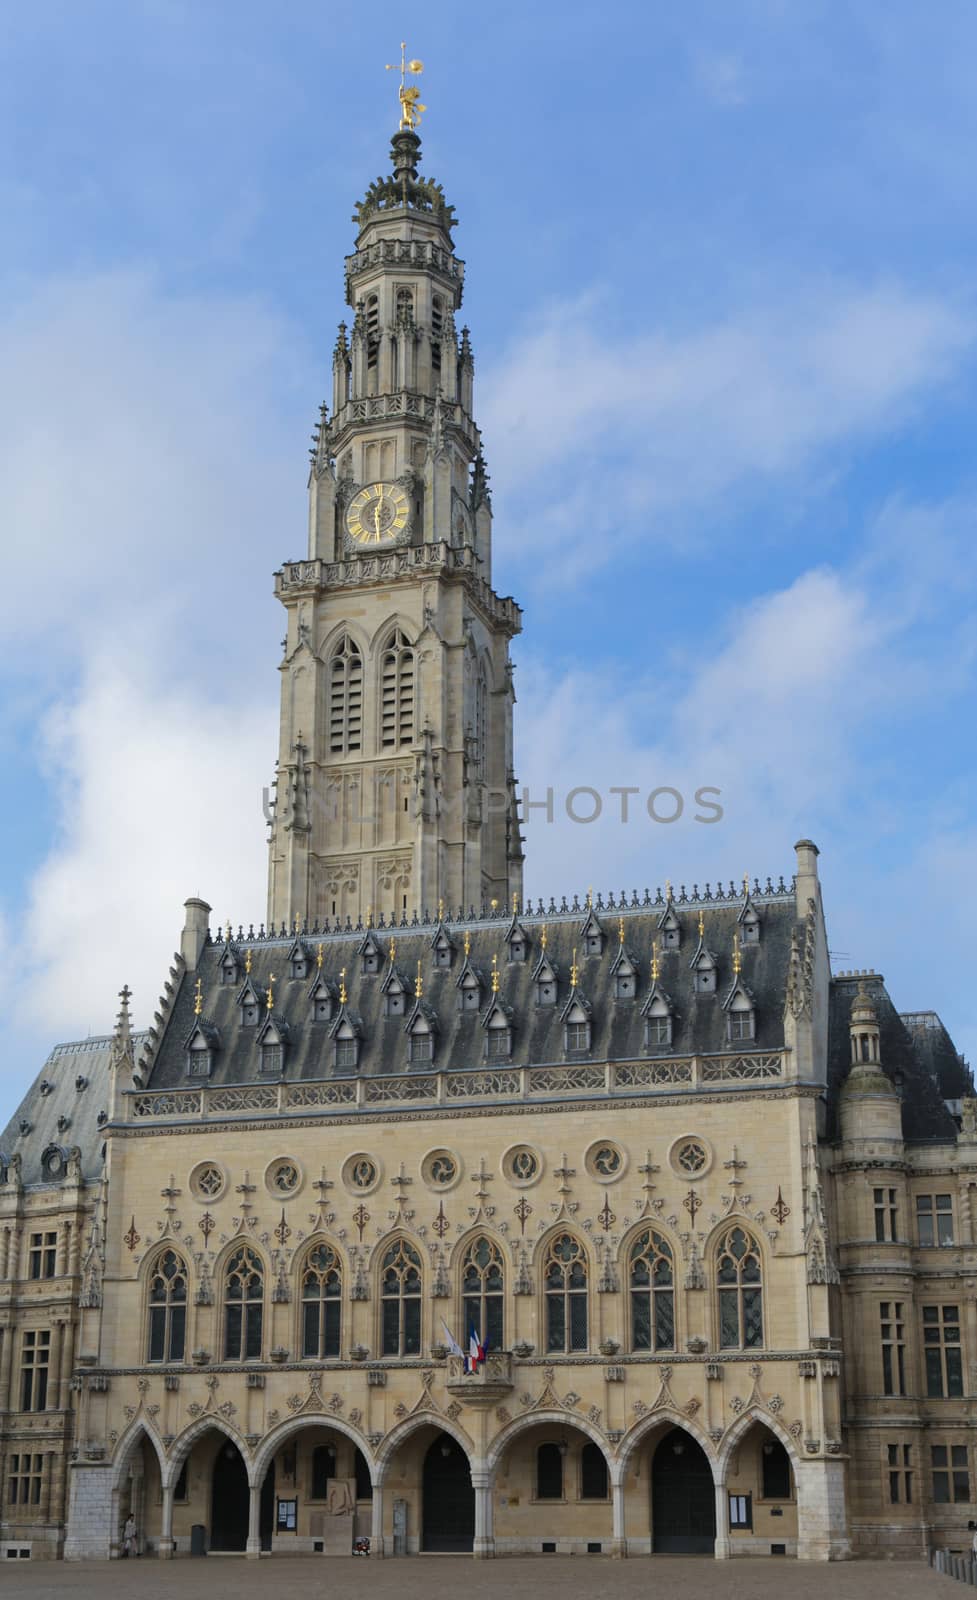 Townhall of Arras by Kartouchken